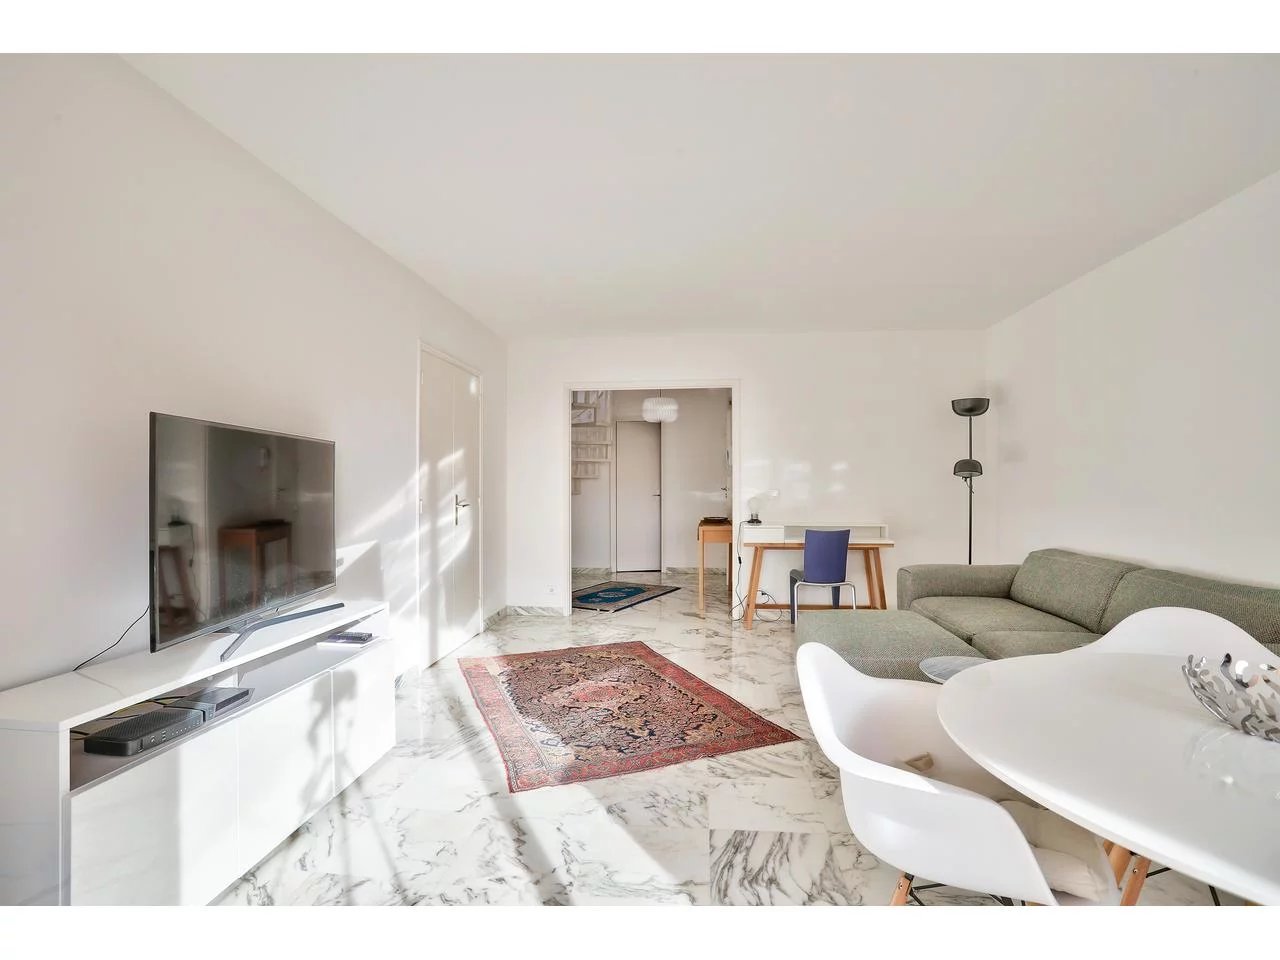 Appartement  2 Locali 53.52m2  In vendita   395 000 €